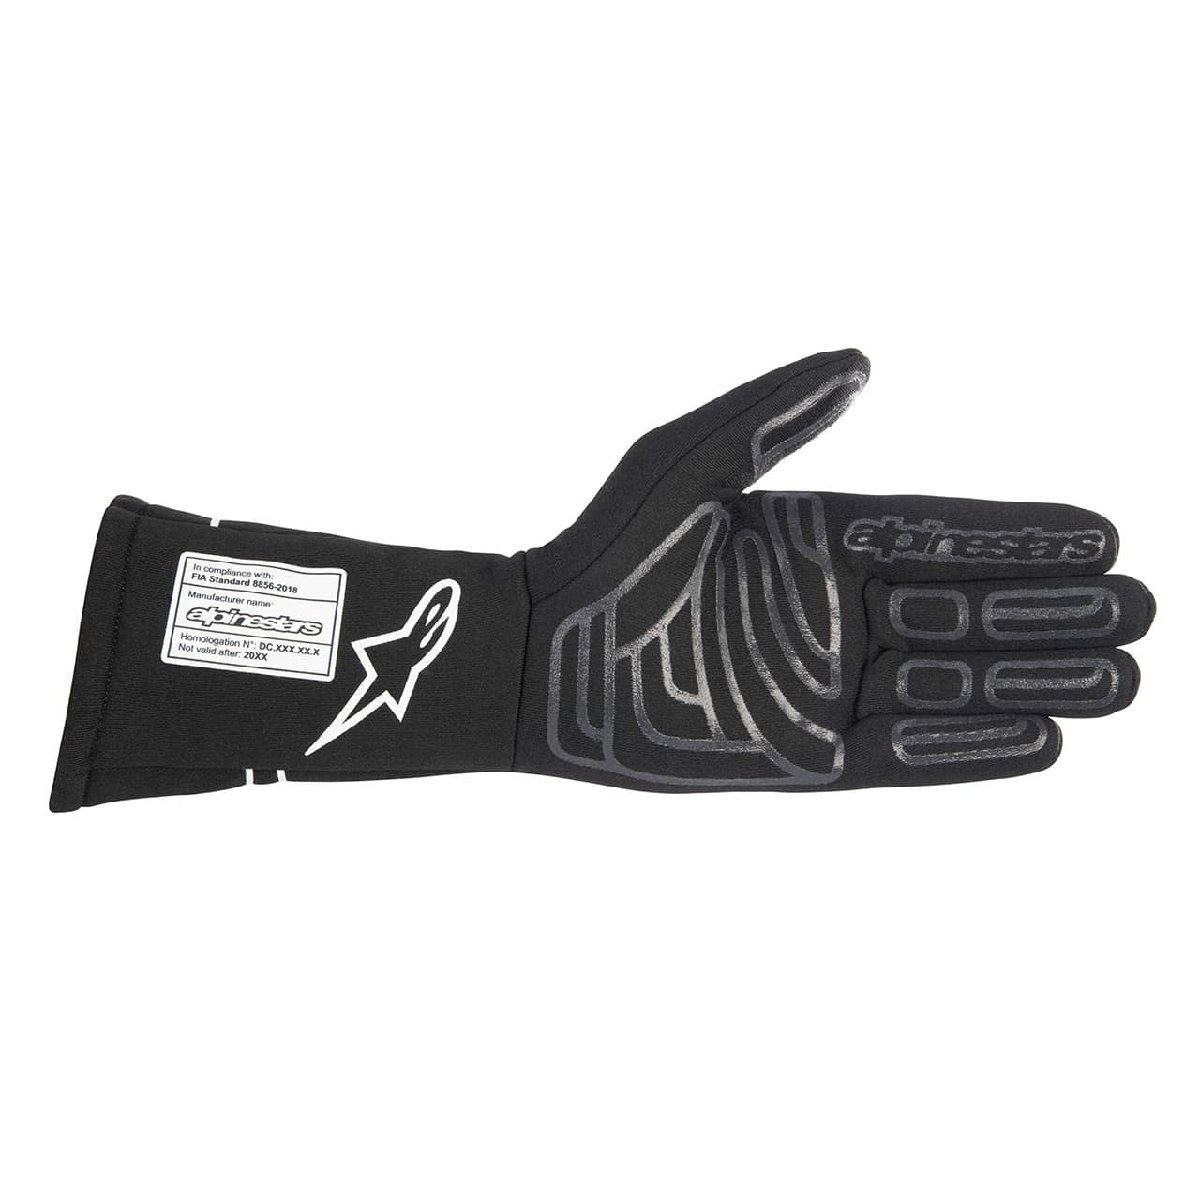 alpinestars( Alpine Stars ) racing glove TECH-1 START V3 GLOVES XL size 10 BLACK [FIA8856-2018 official recognition ]